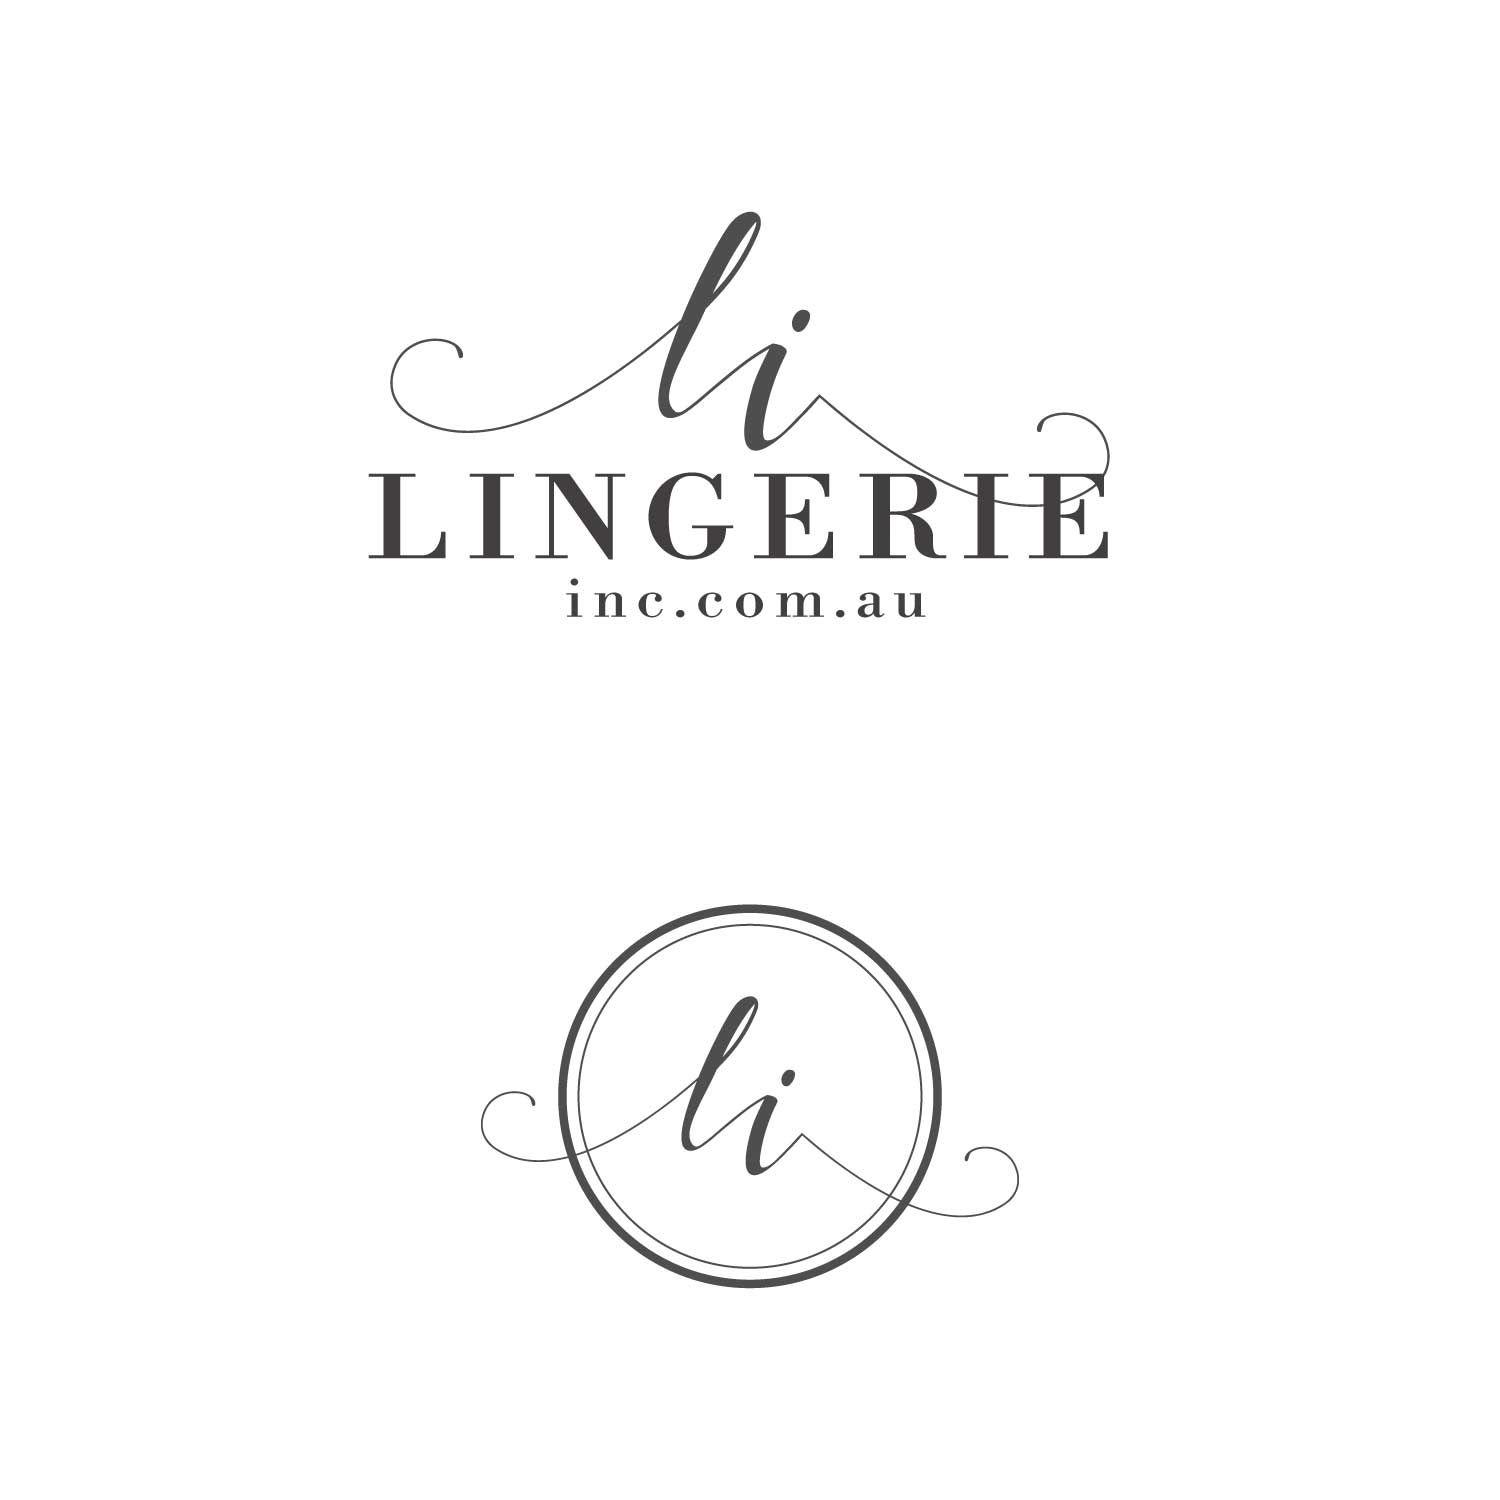 Lingerie Logo - Adult Logo Design for Lingerie Inc by ipadipad. Design